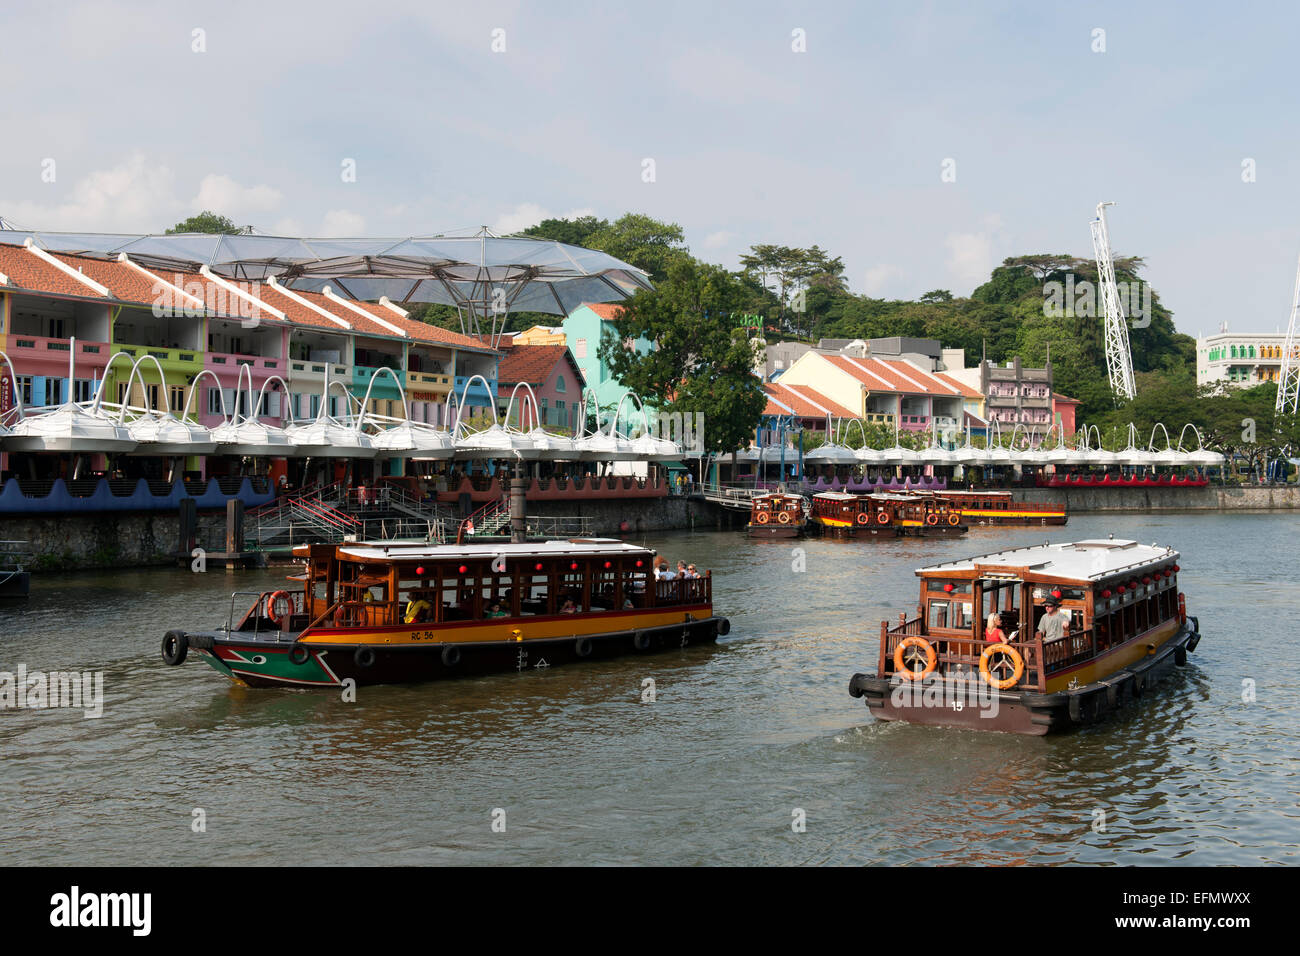 Boote auf dem Singapore River am Clarke Quay in Singapur. Stockfoto